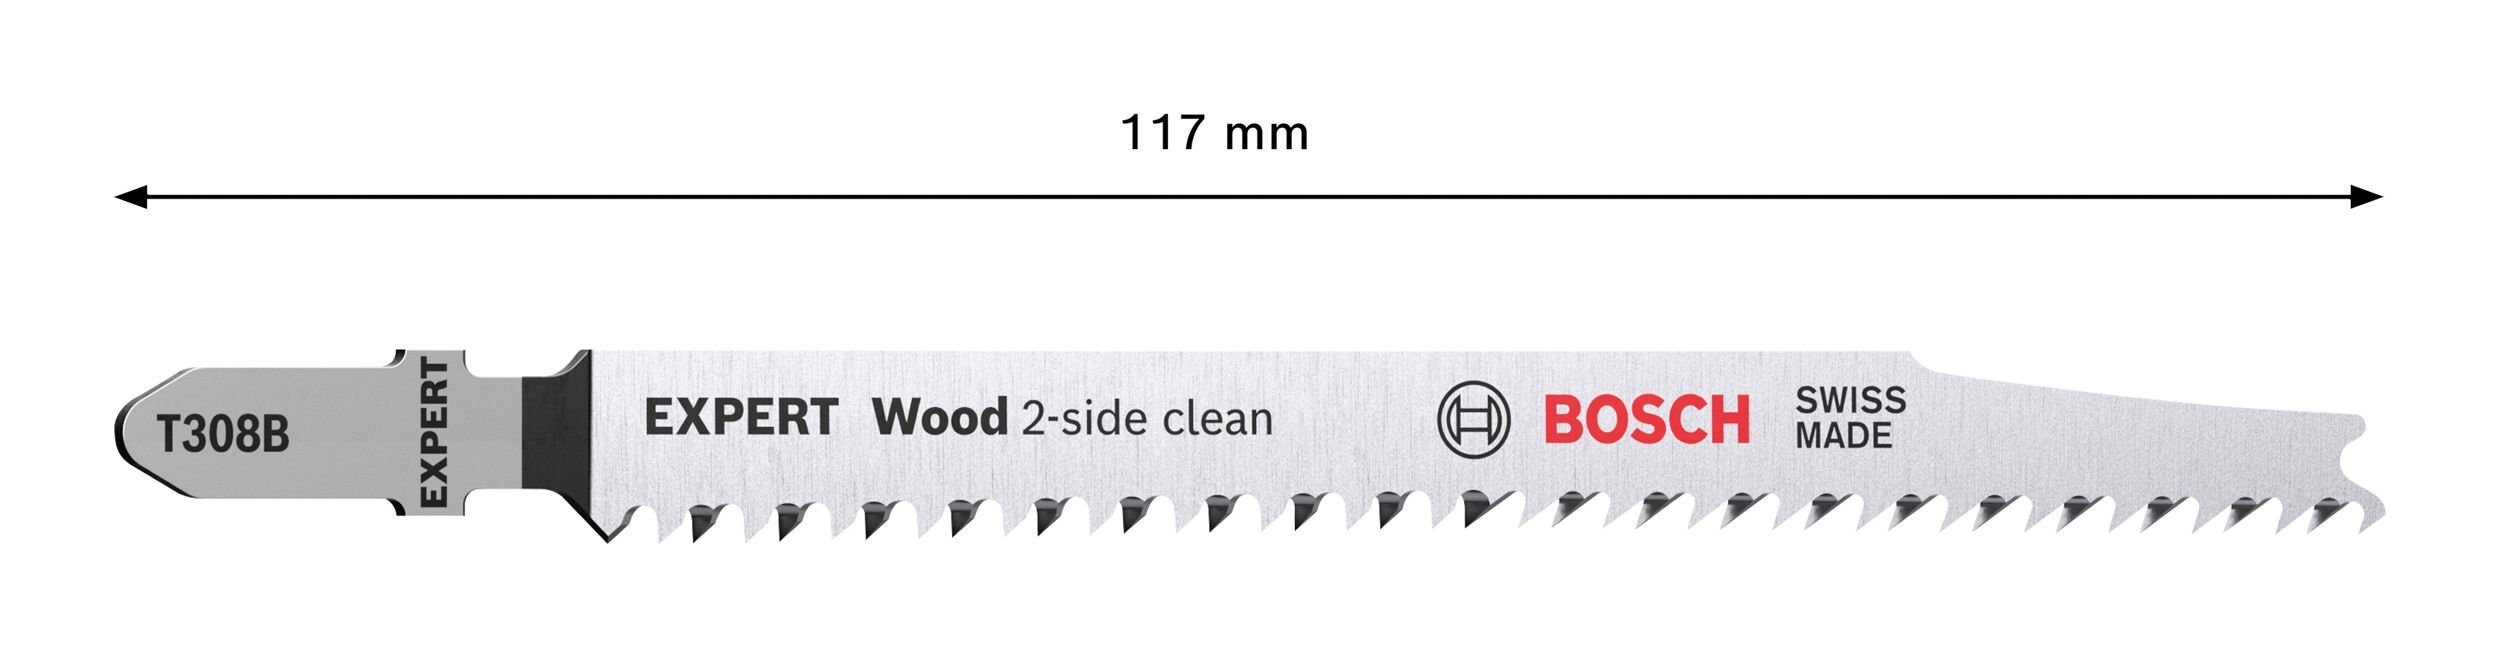 BOSCH Stichsägeblatt Expert Wood 2-side, Stichsägen 100 für T B, "Wood Stück clean" 308 2-side Expert